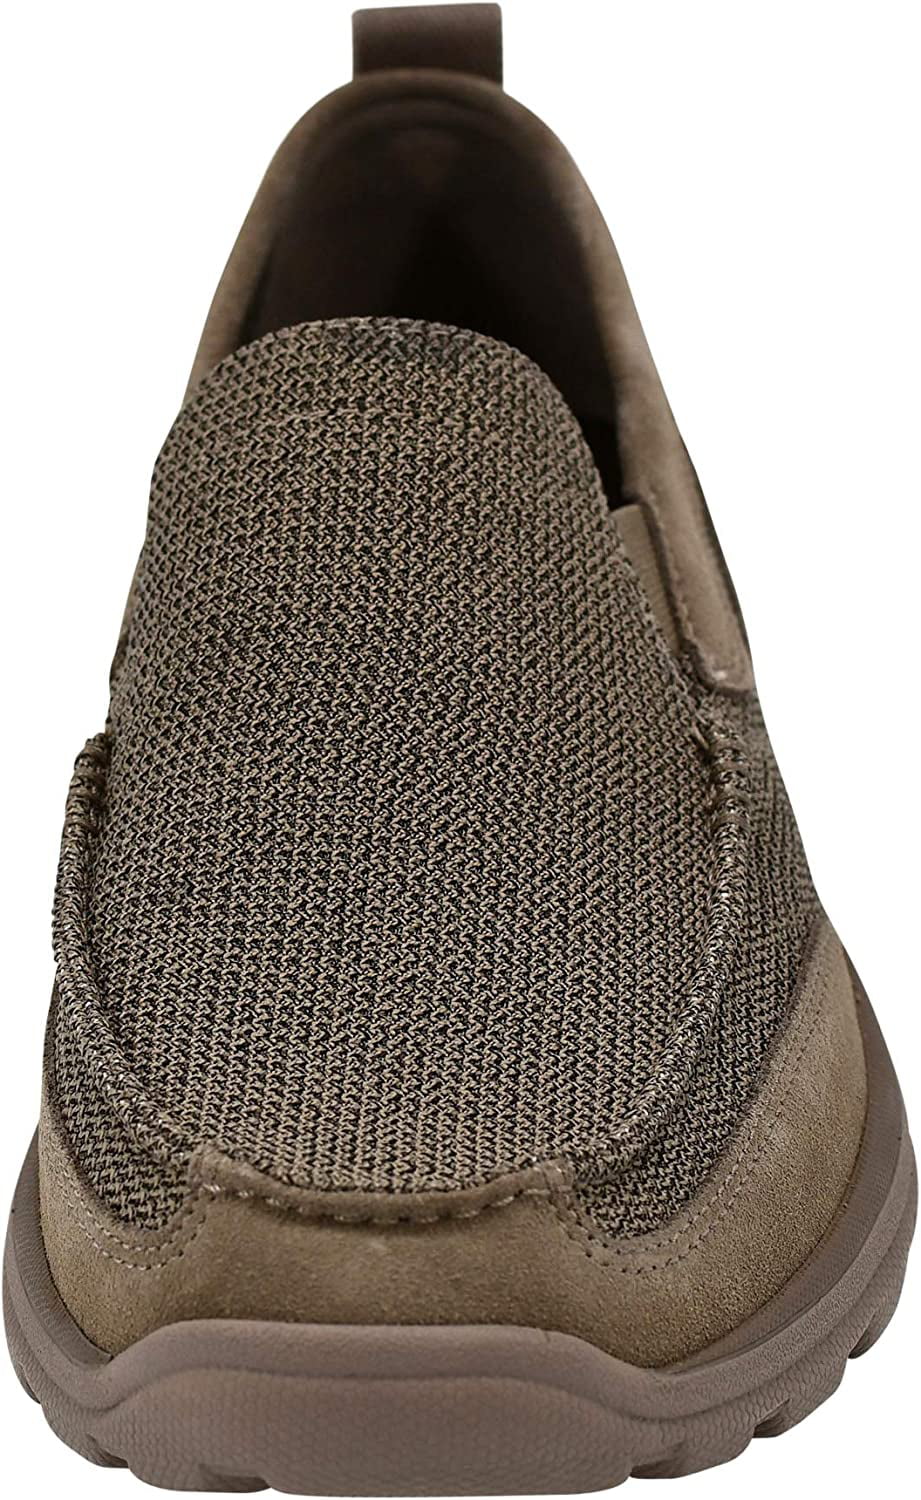 Skechers Superior Milford Khaki Slip-On Loafers 13 M US Walmart.com